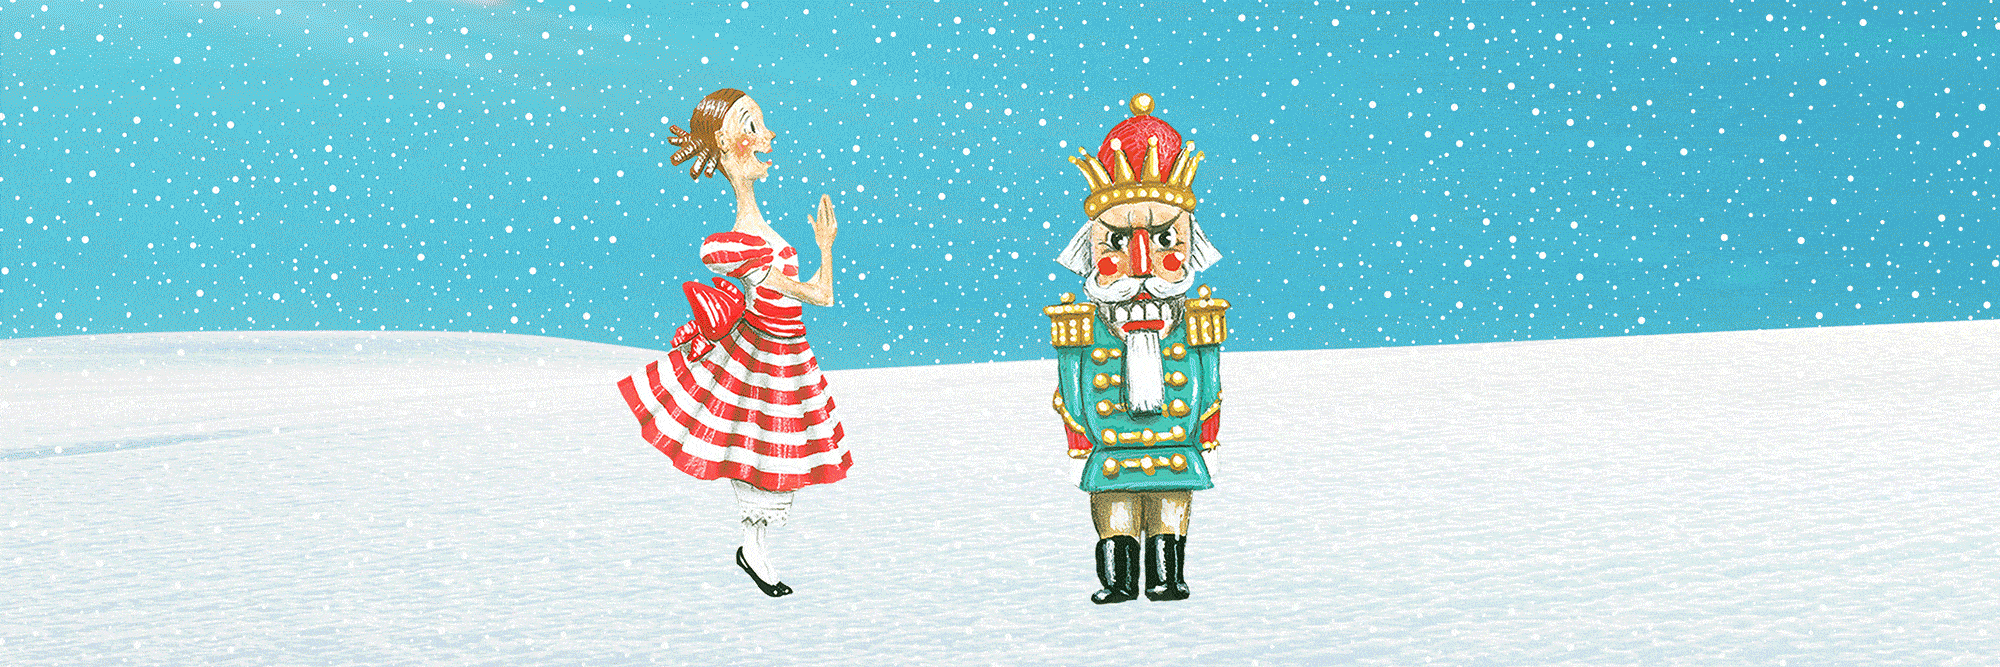 Clara and Nutcracker in the snow.